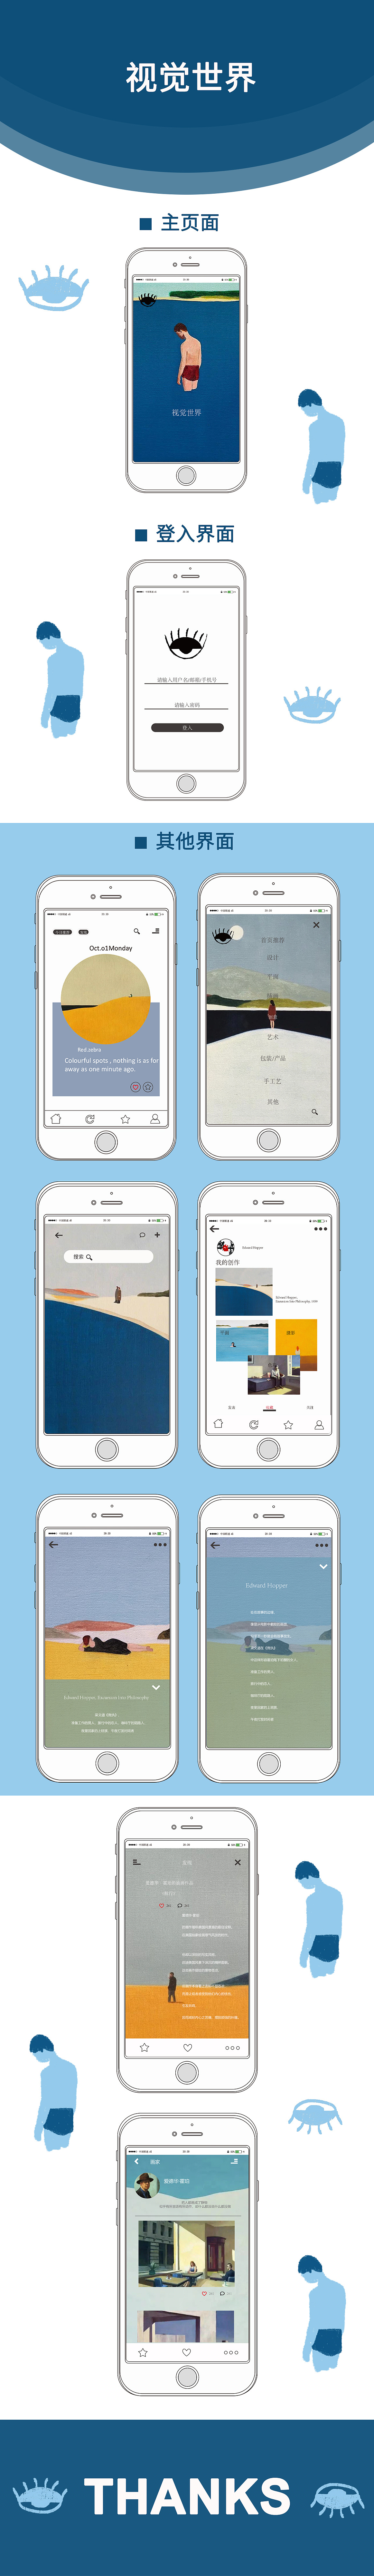 app主界面设计图片